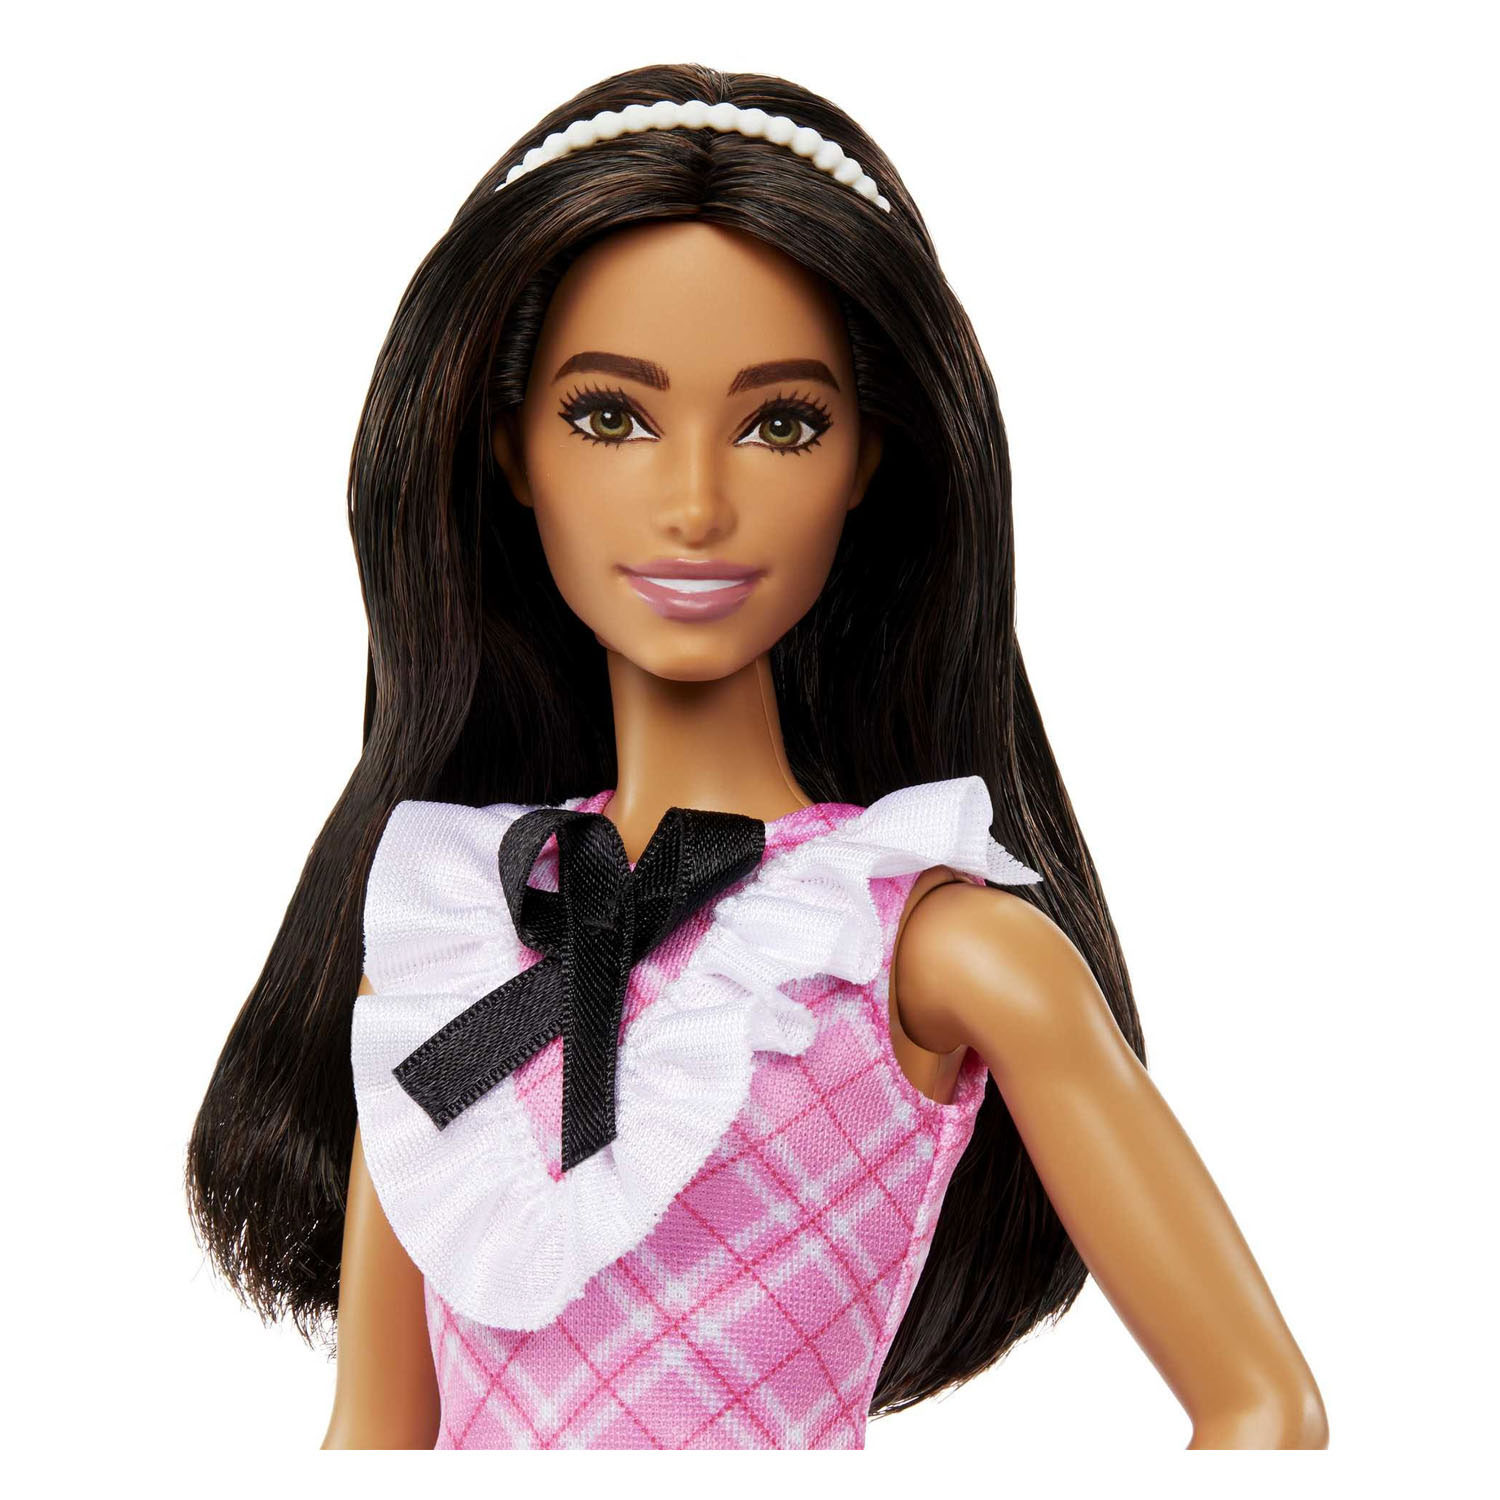 Poupée Barbie Fashionista - Plaid rose